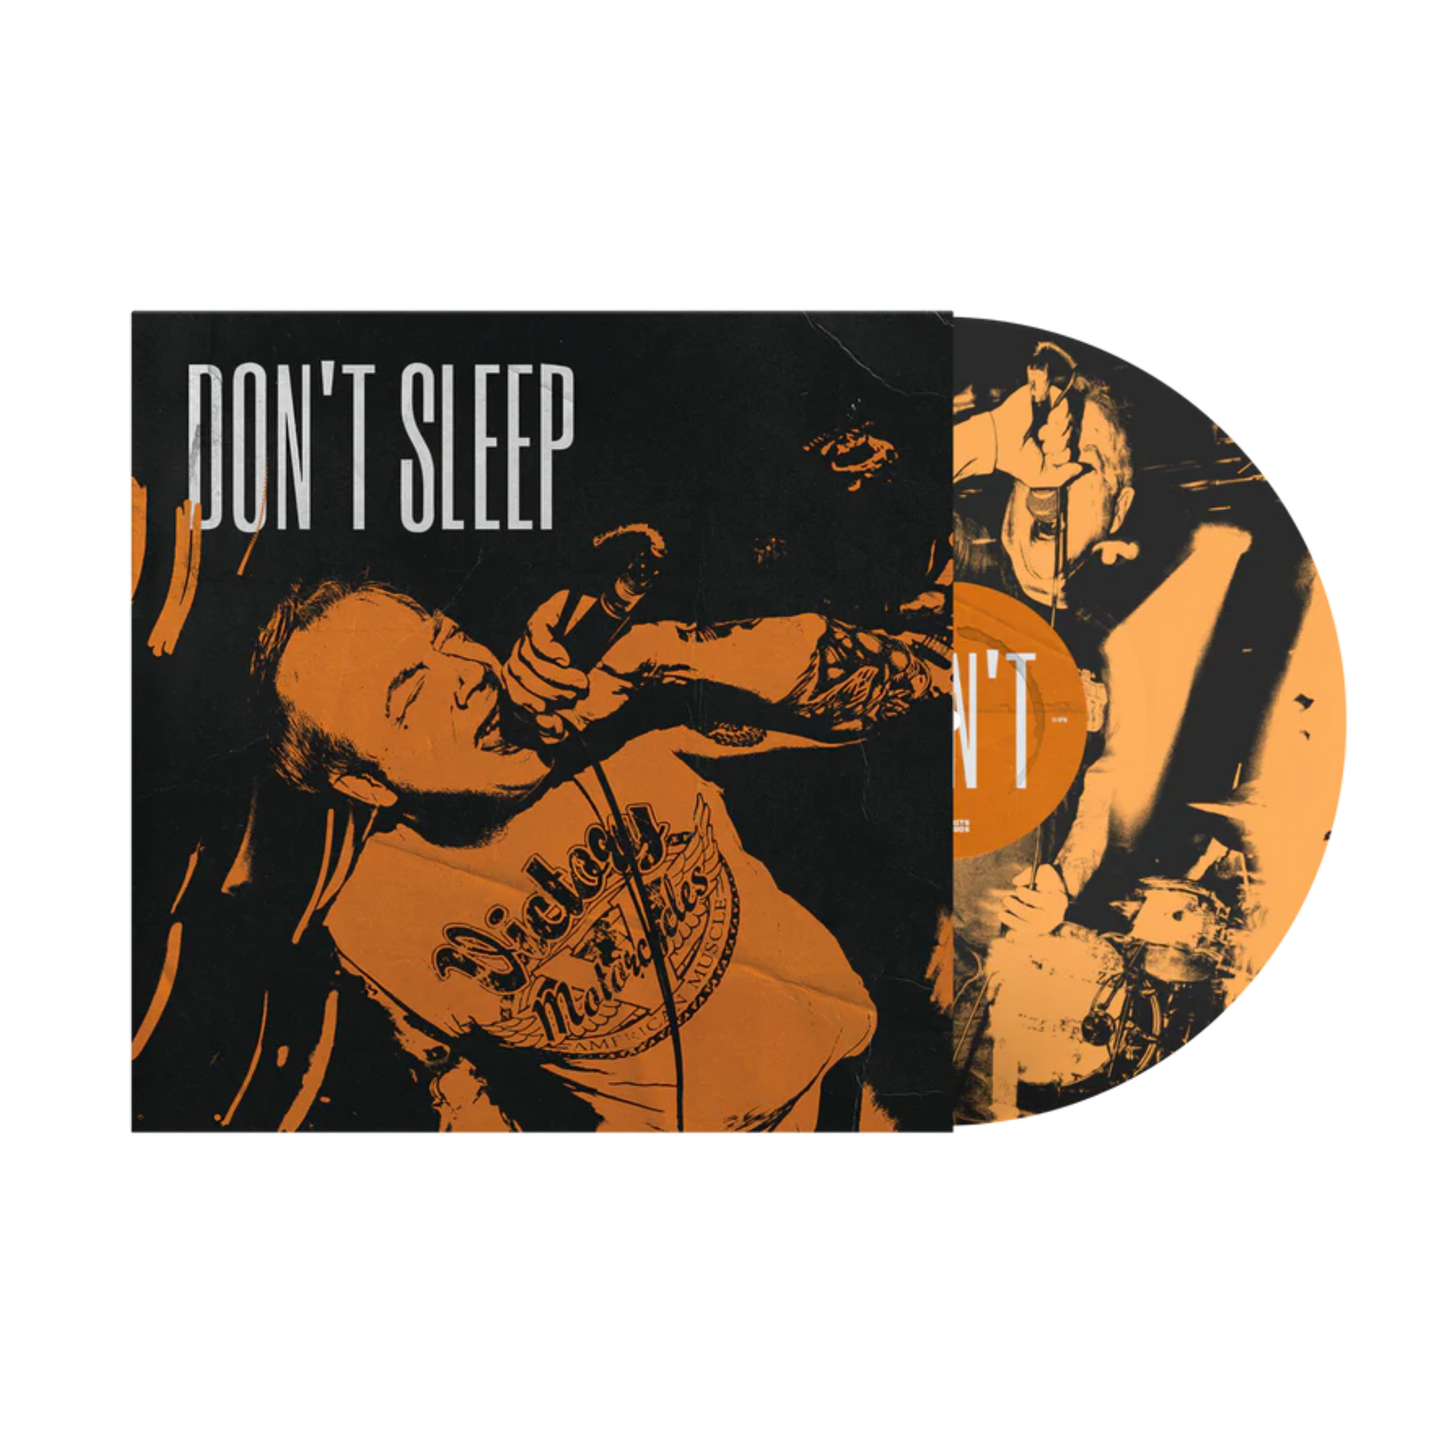 Don’t Sleep “Self Titled” EP